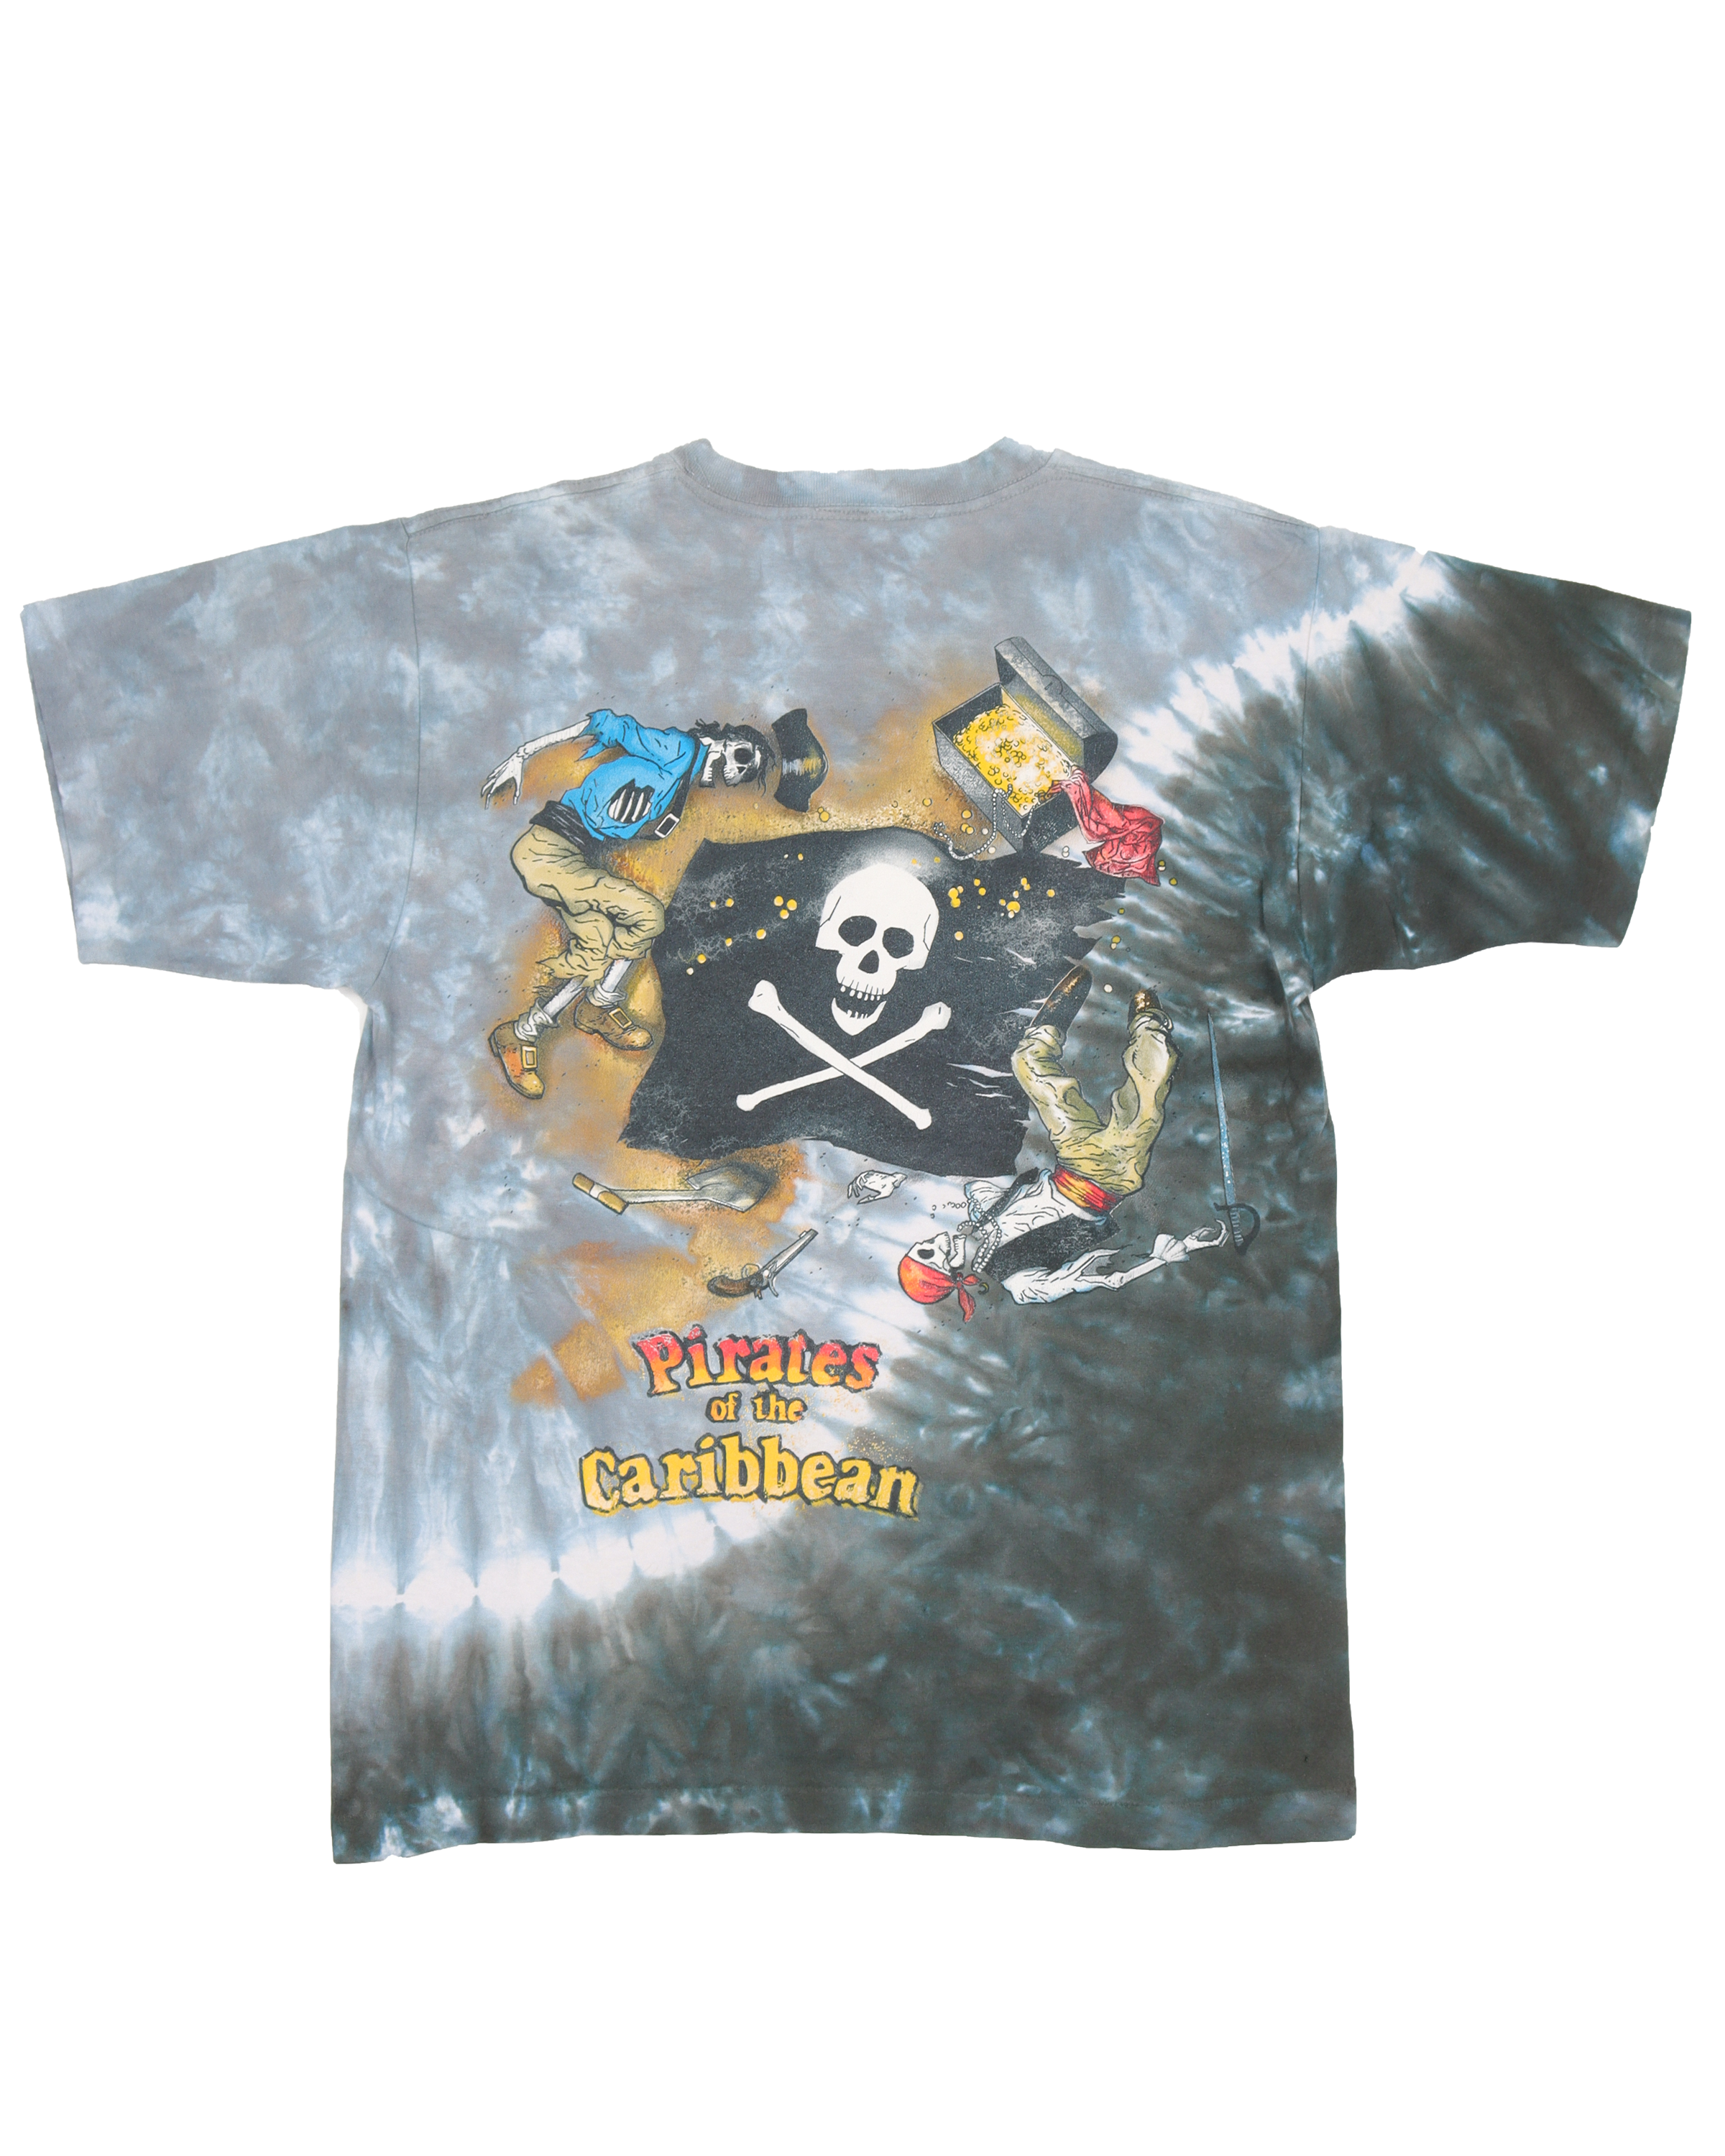 Vintage Disney Pirates of the Caribbean Tie-Dye T-Shirt